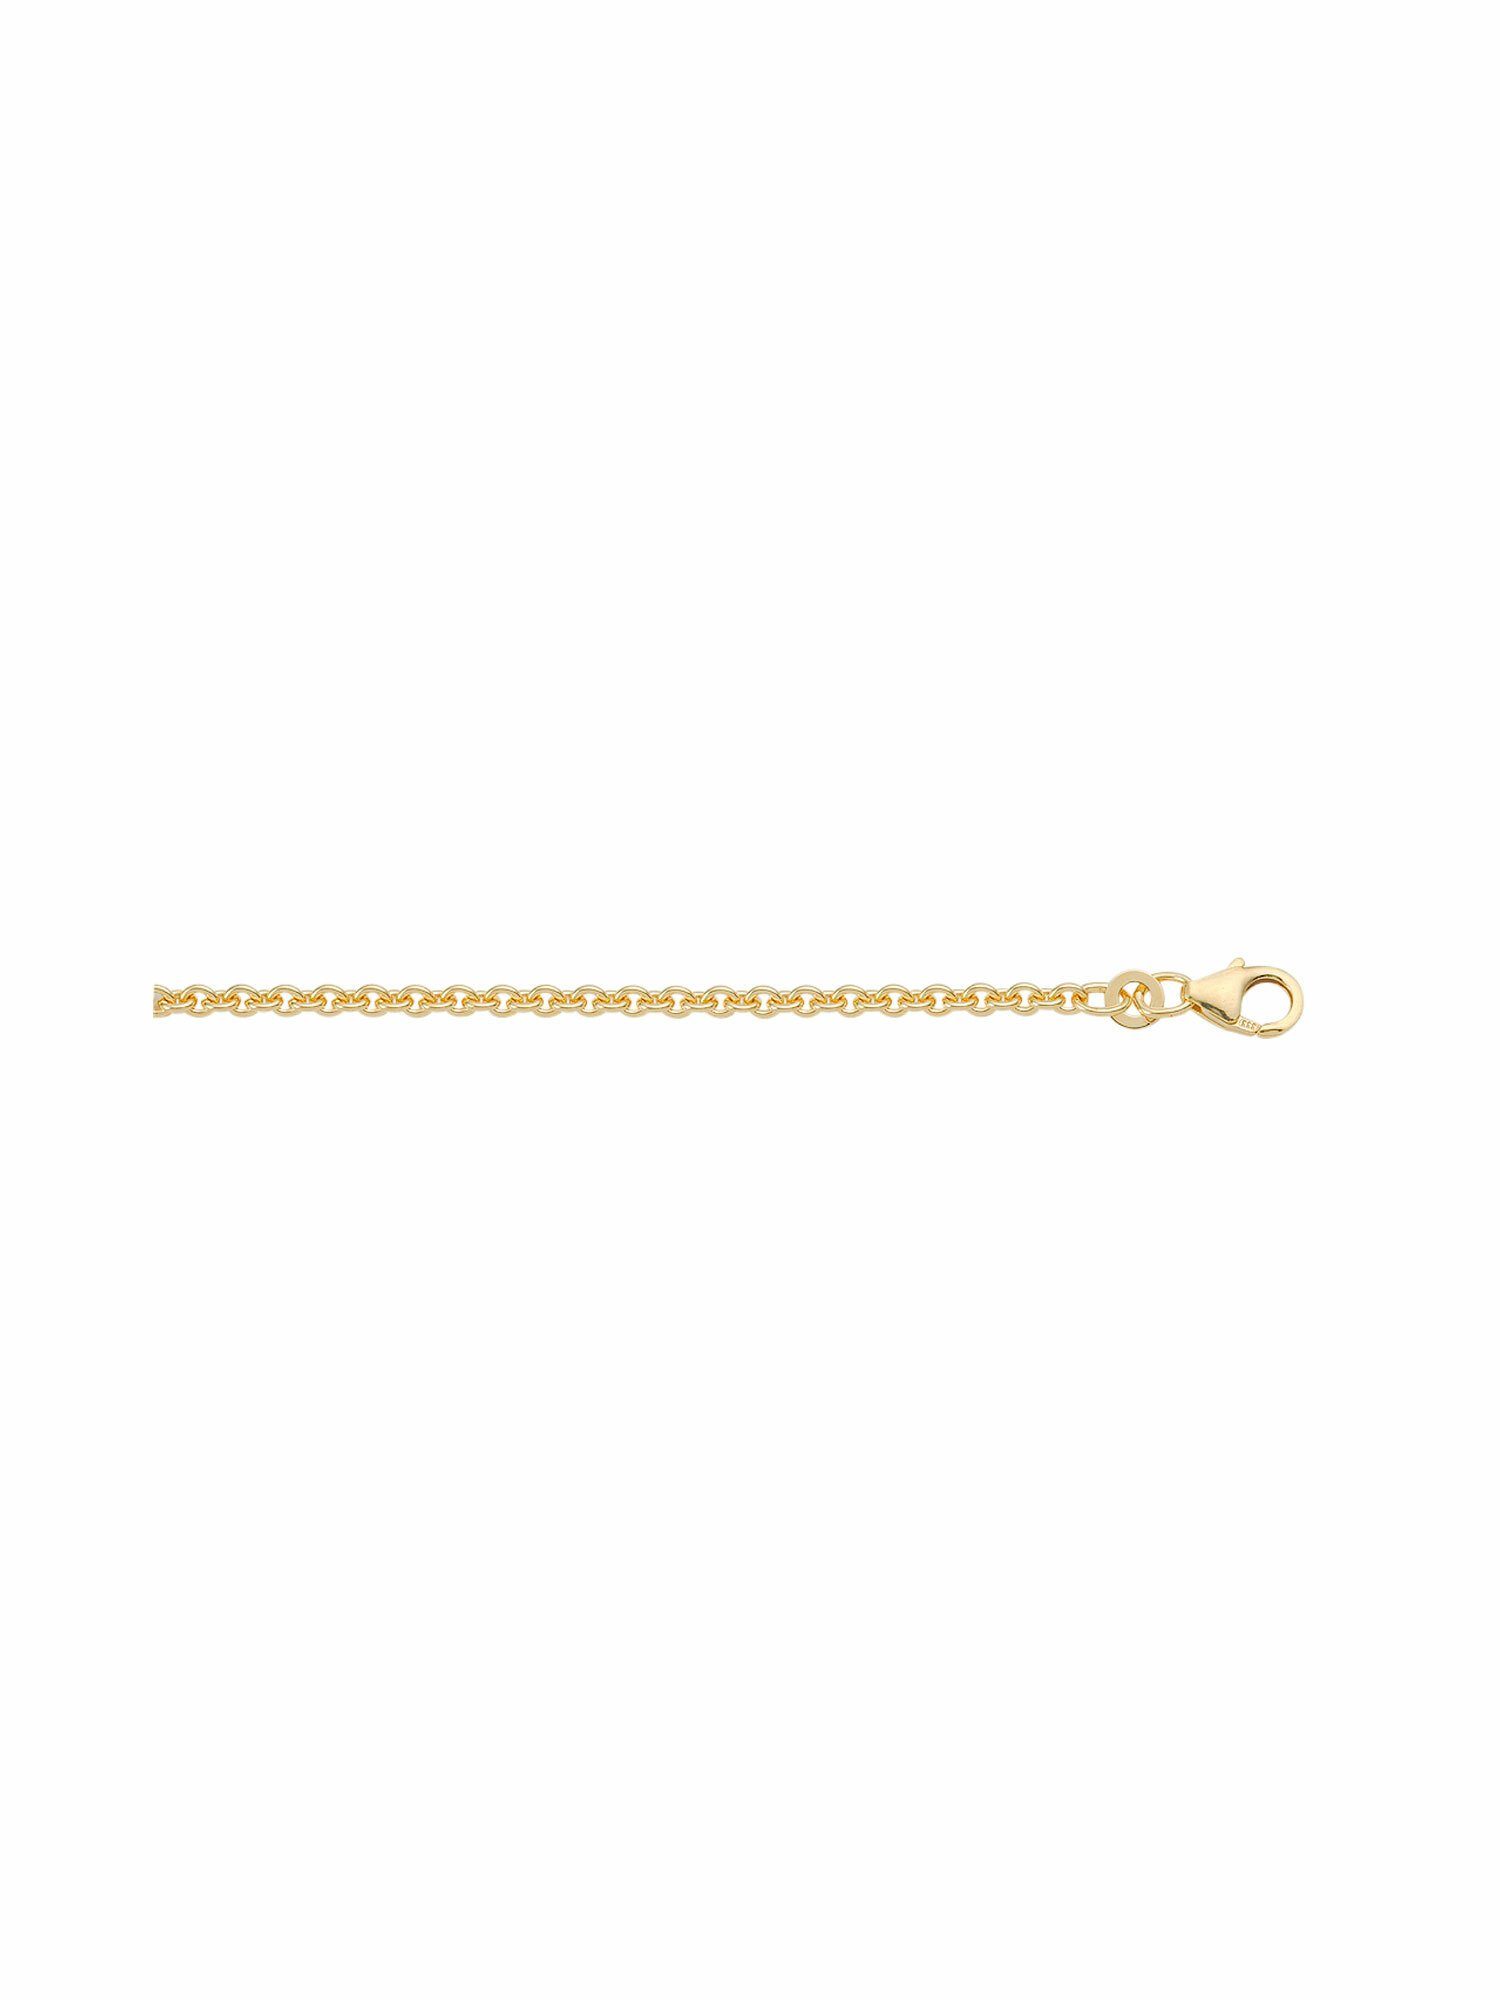 Damen Schmuck Adelia´s Goldkette 585 Gold Anker Halskette, 585 Gold Ankerkette rund Goldschmuck für Damen